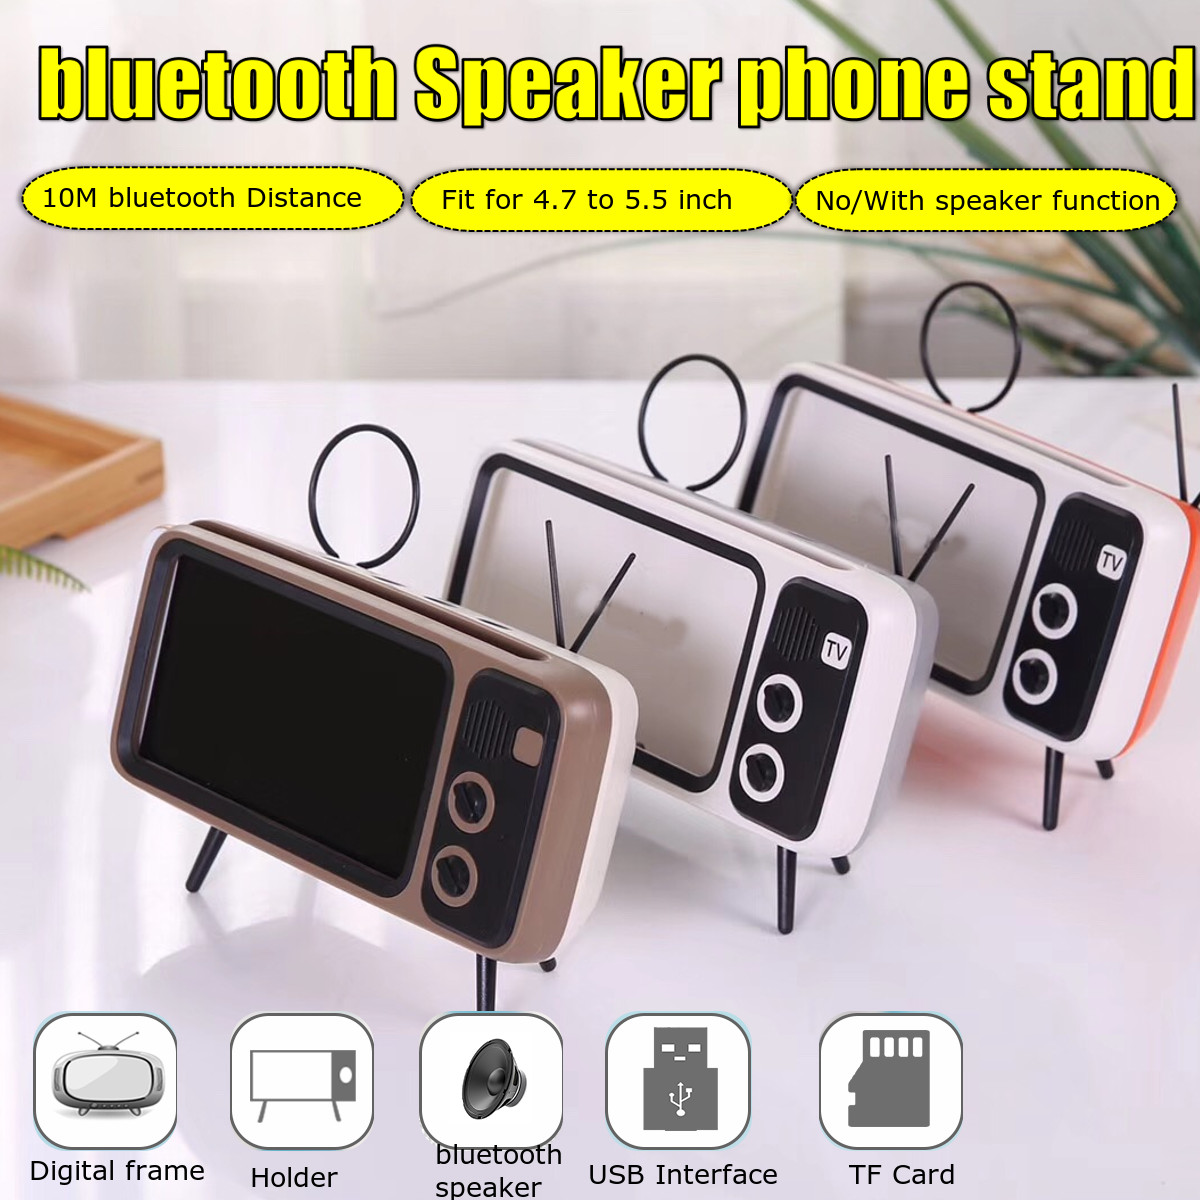 Bakeey-Mini-Retro-TV-Pattern-bluetooth-Speaker-Desktop-Cell-Phone-Stand-Holder-Lazy-Bracket-for-Mobi-1634628-2